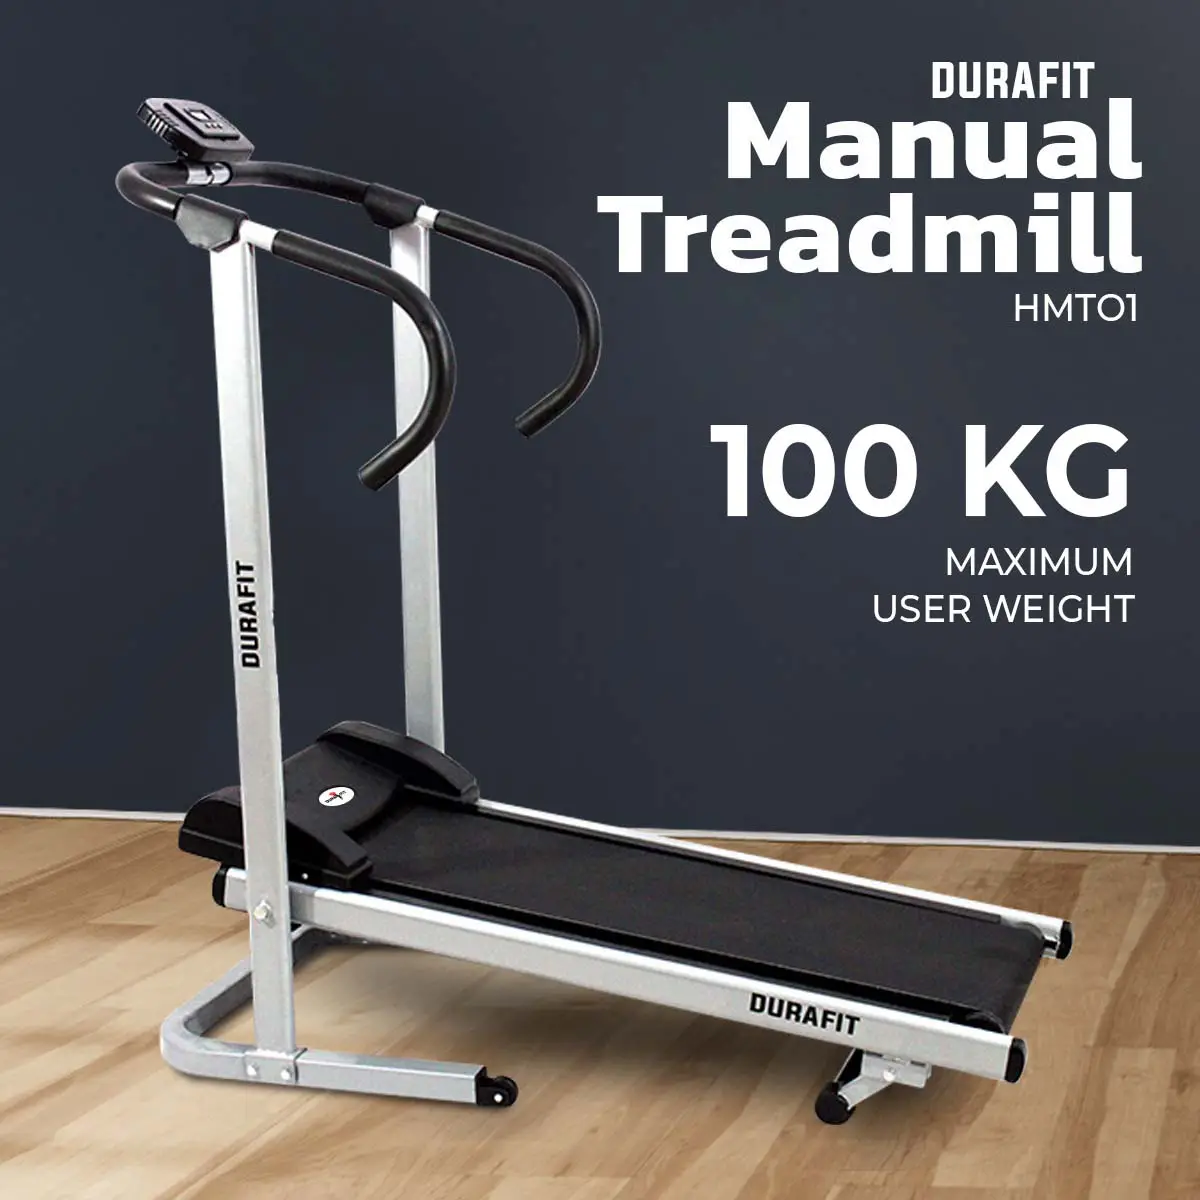 Durafit Manual Treadmill Hmt01 with maximum user weight of 100kg